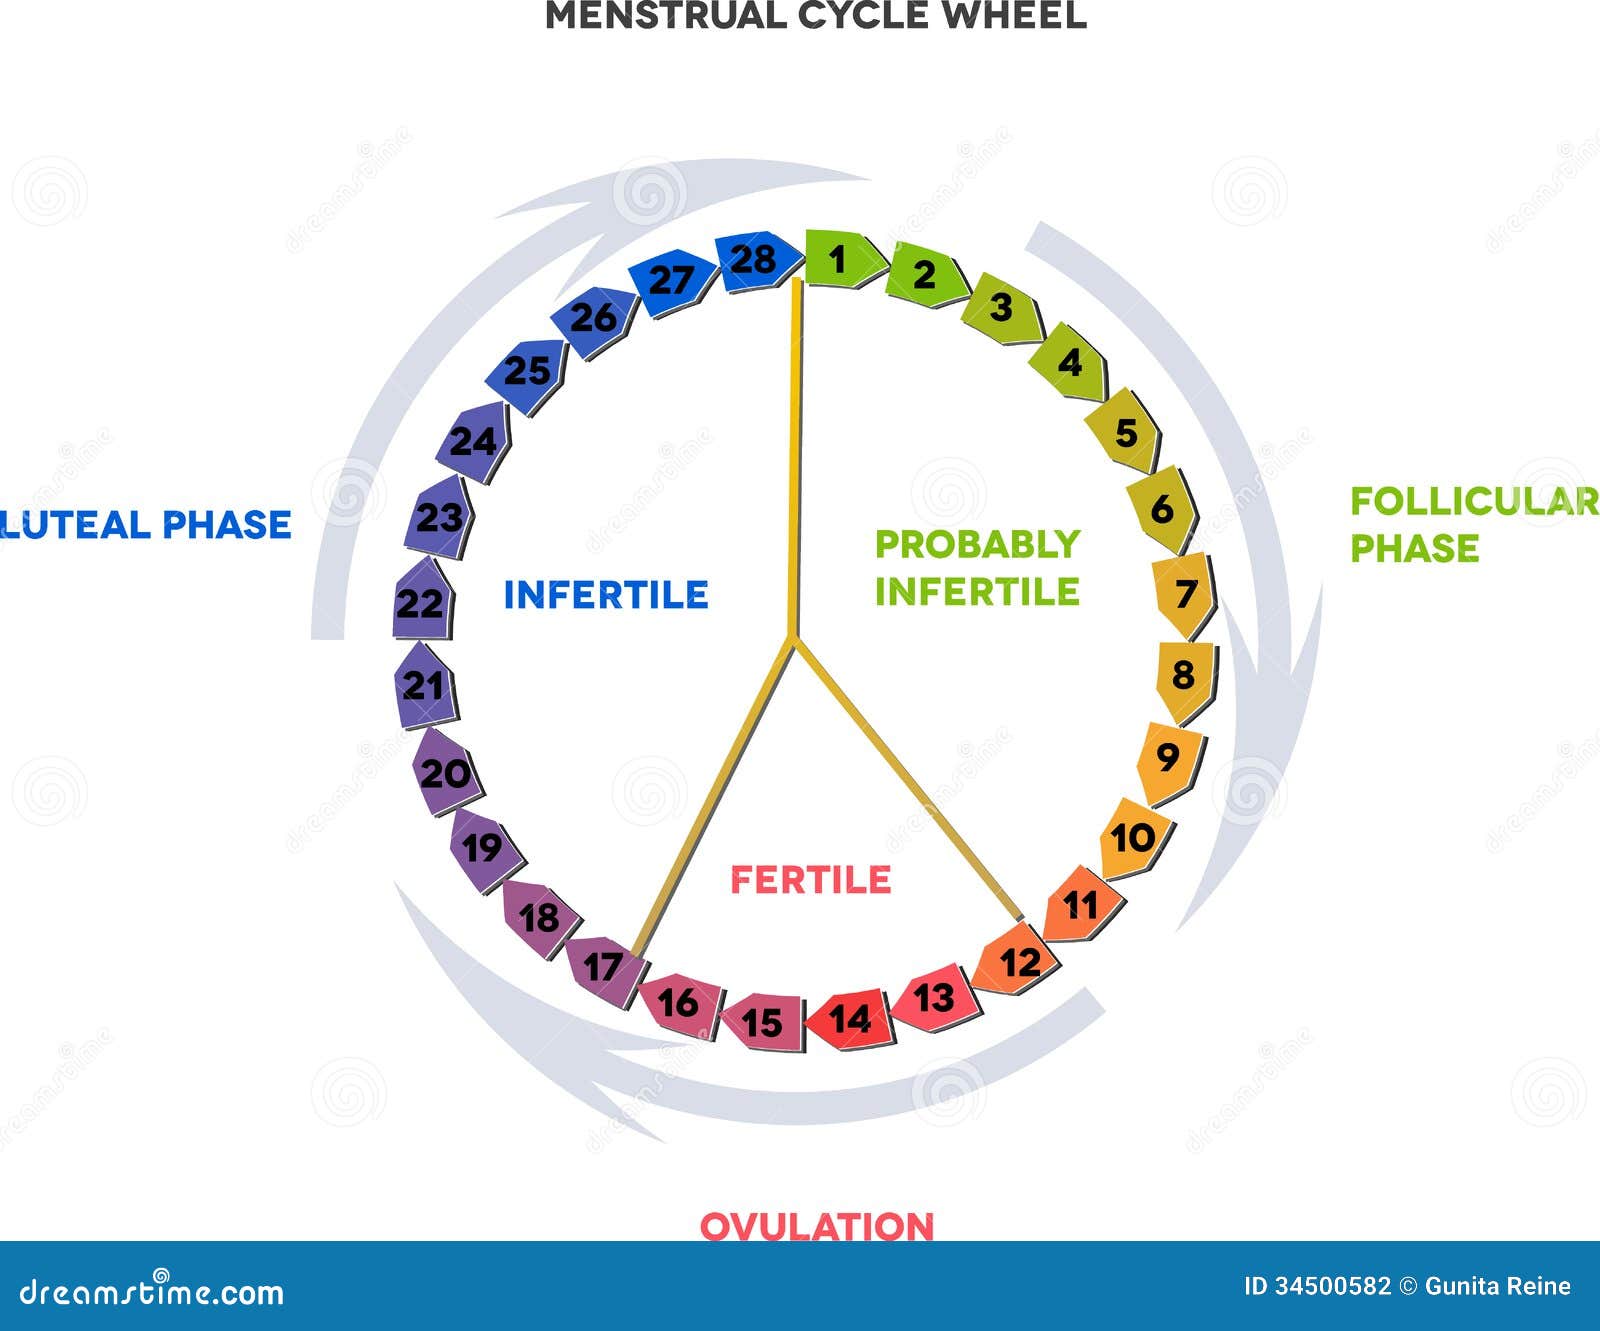 menstrual cycle wheel